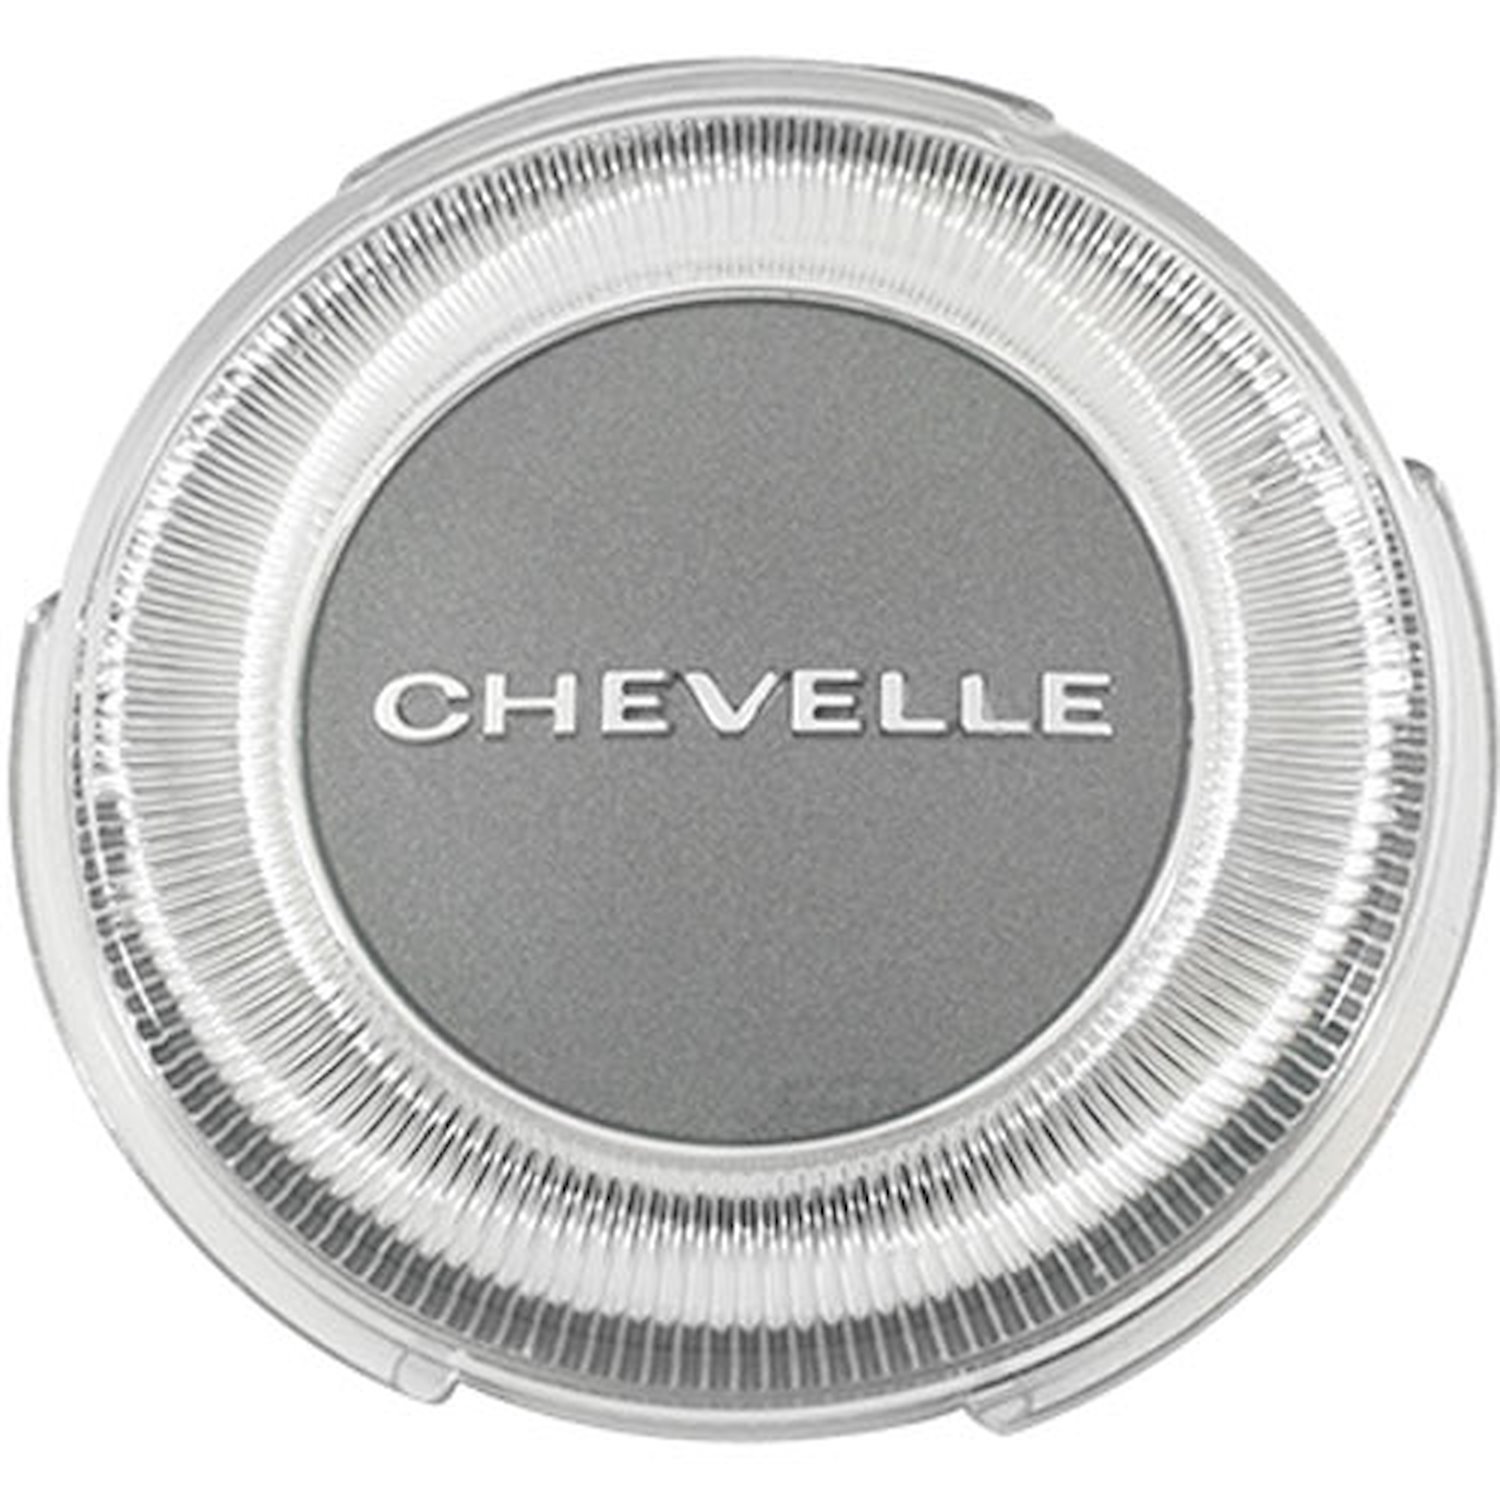 Horn Button Emblem 1967 Chevy Chevelle